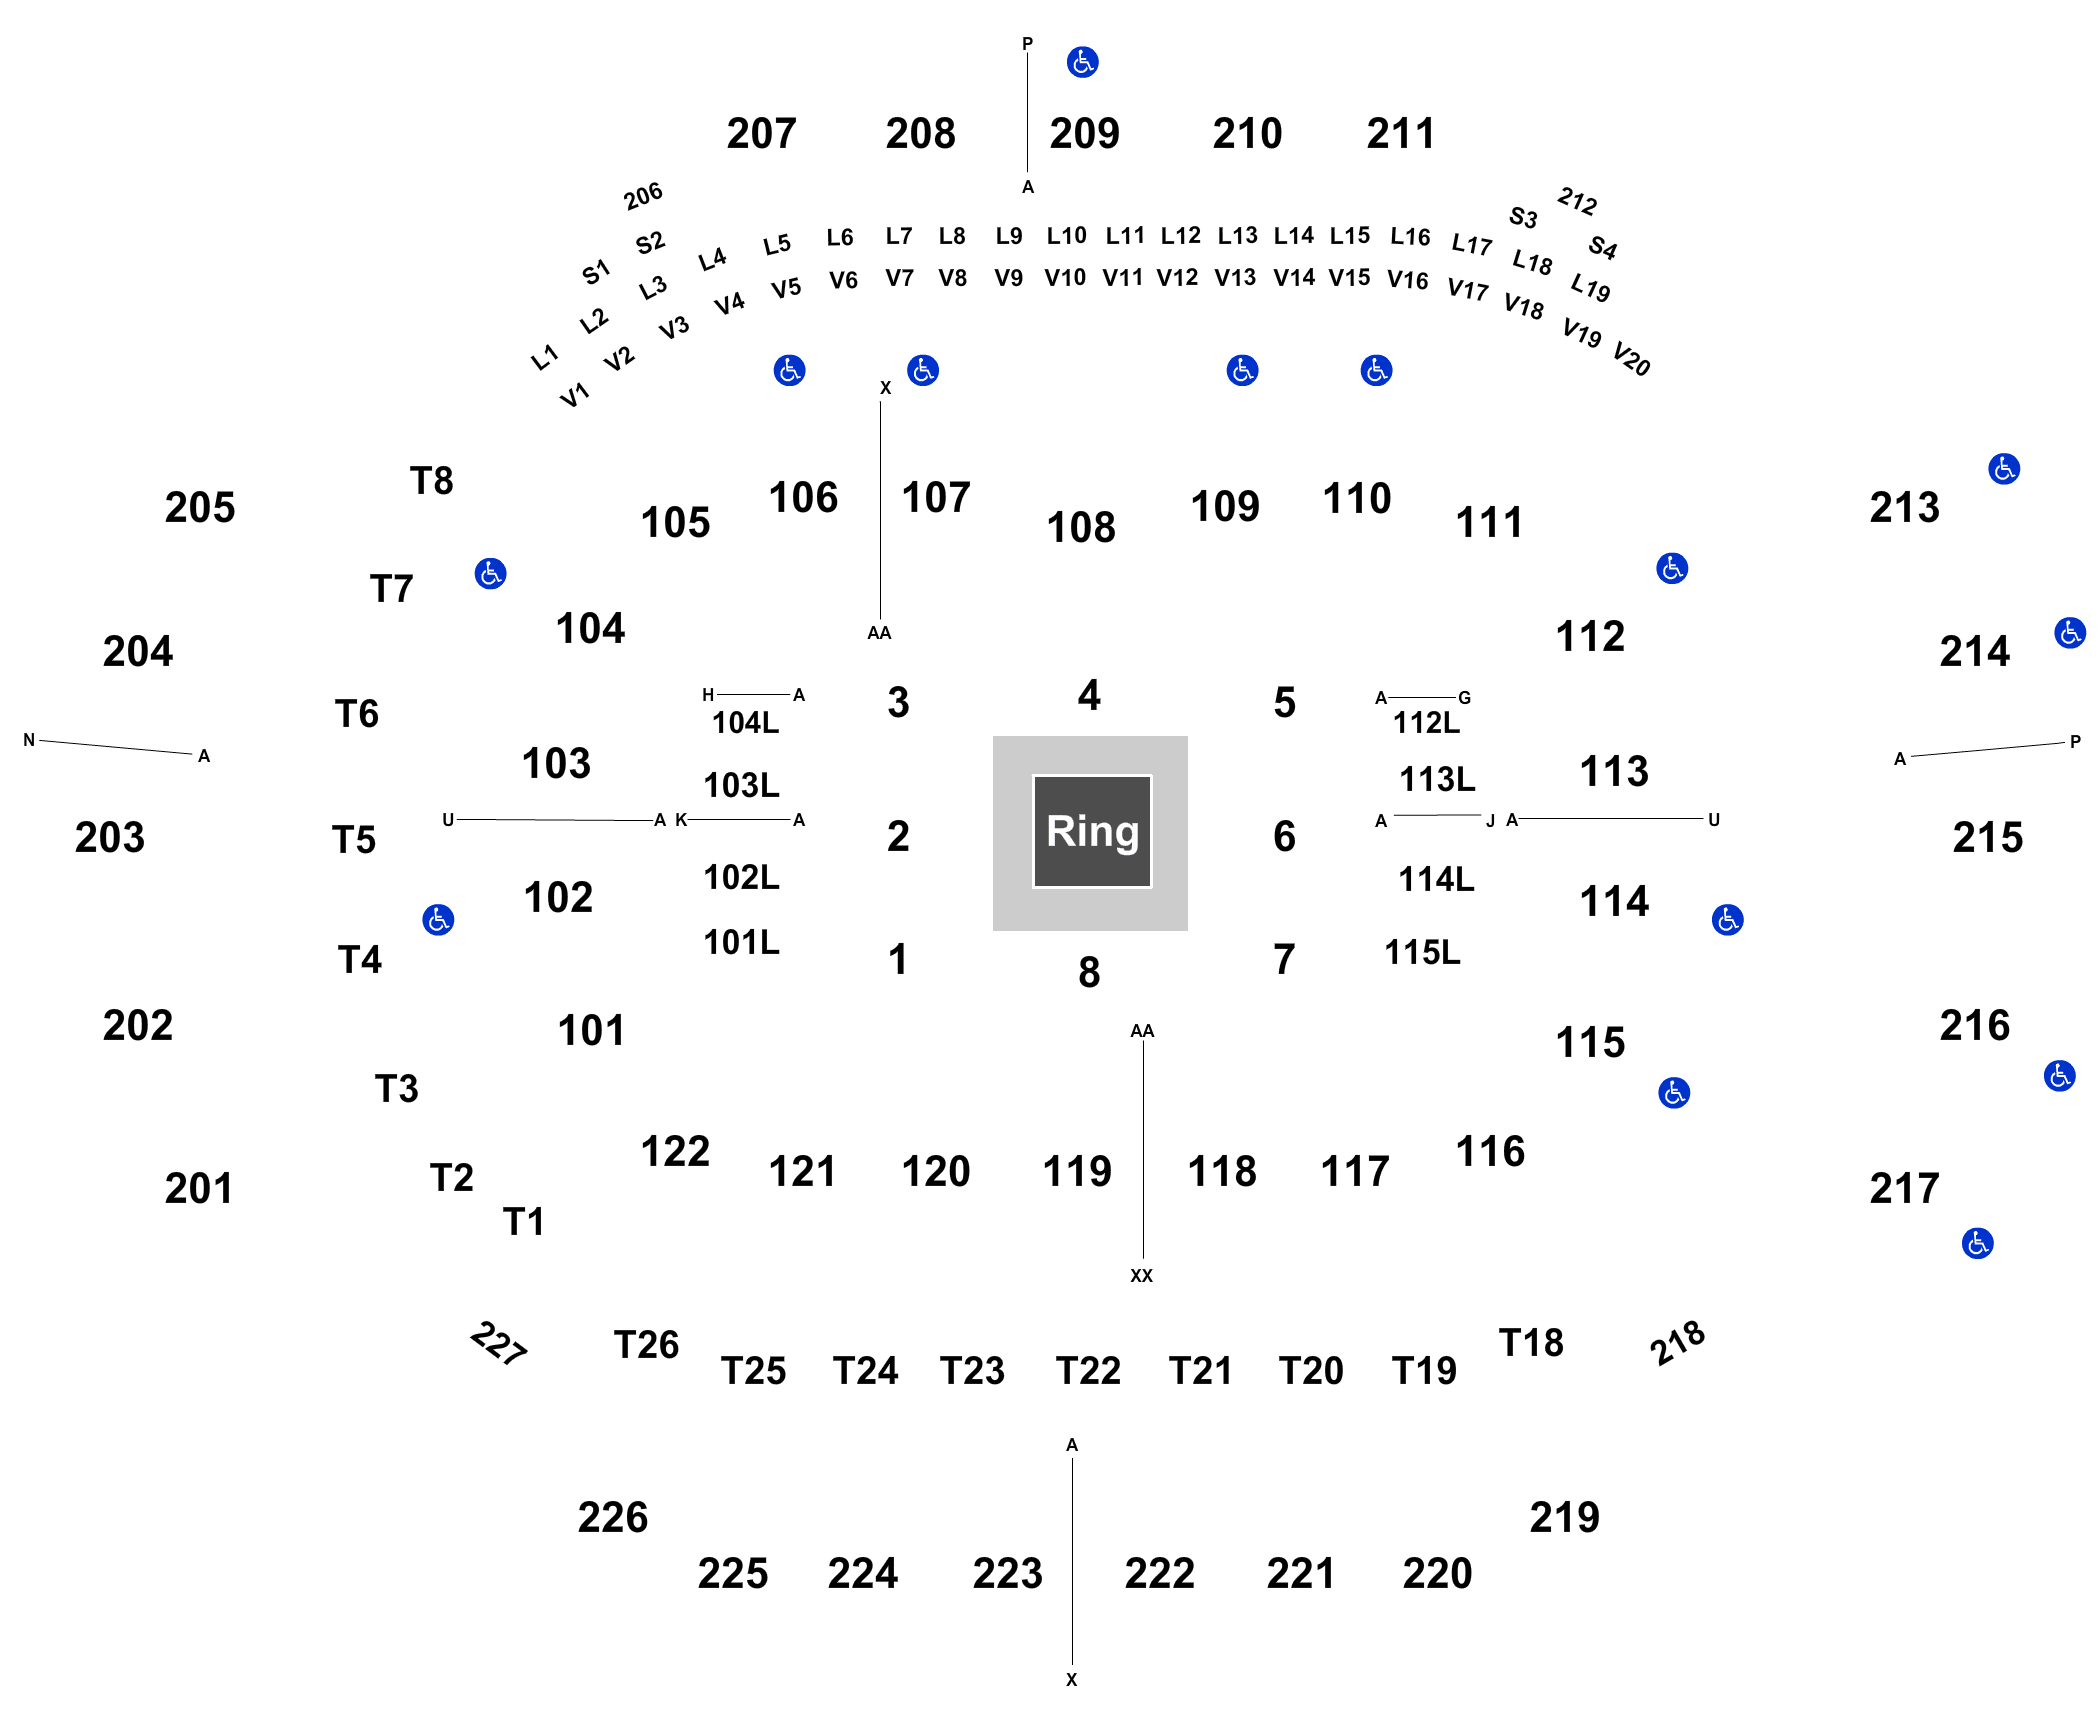 State Farm Arena Seating Chart Atlanta Ga